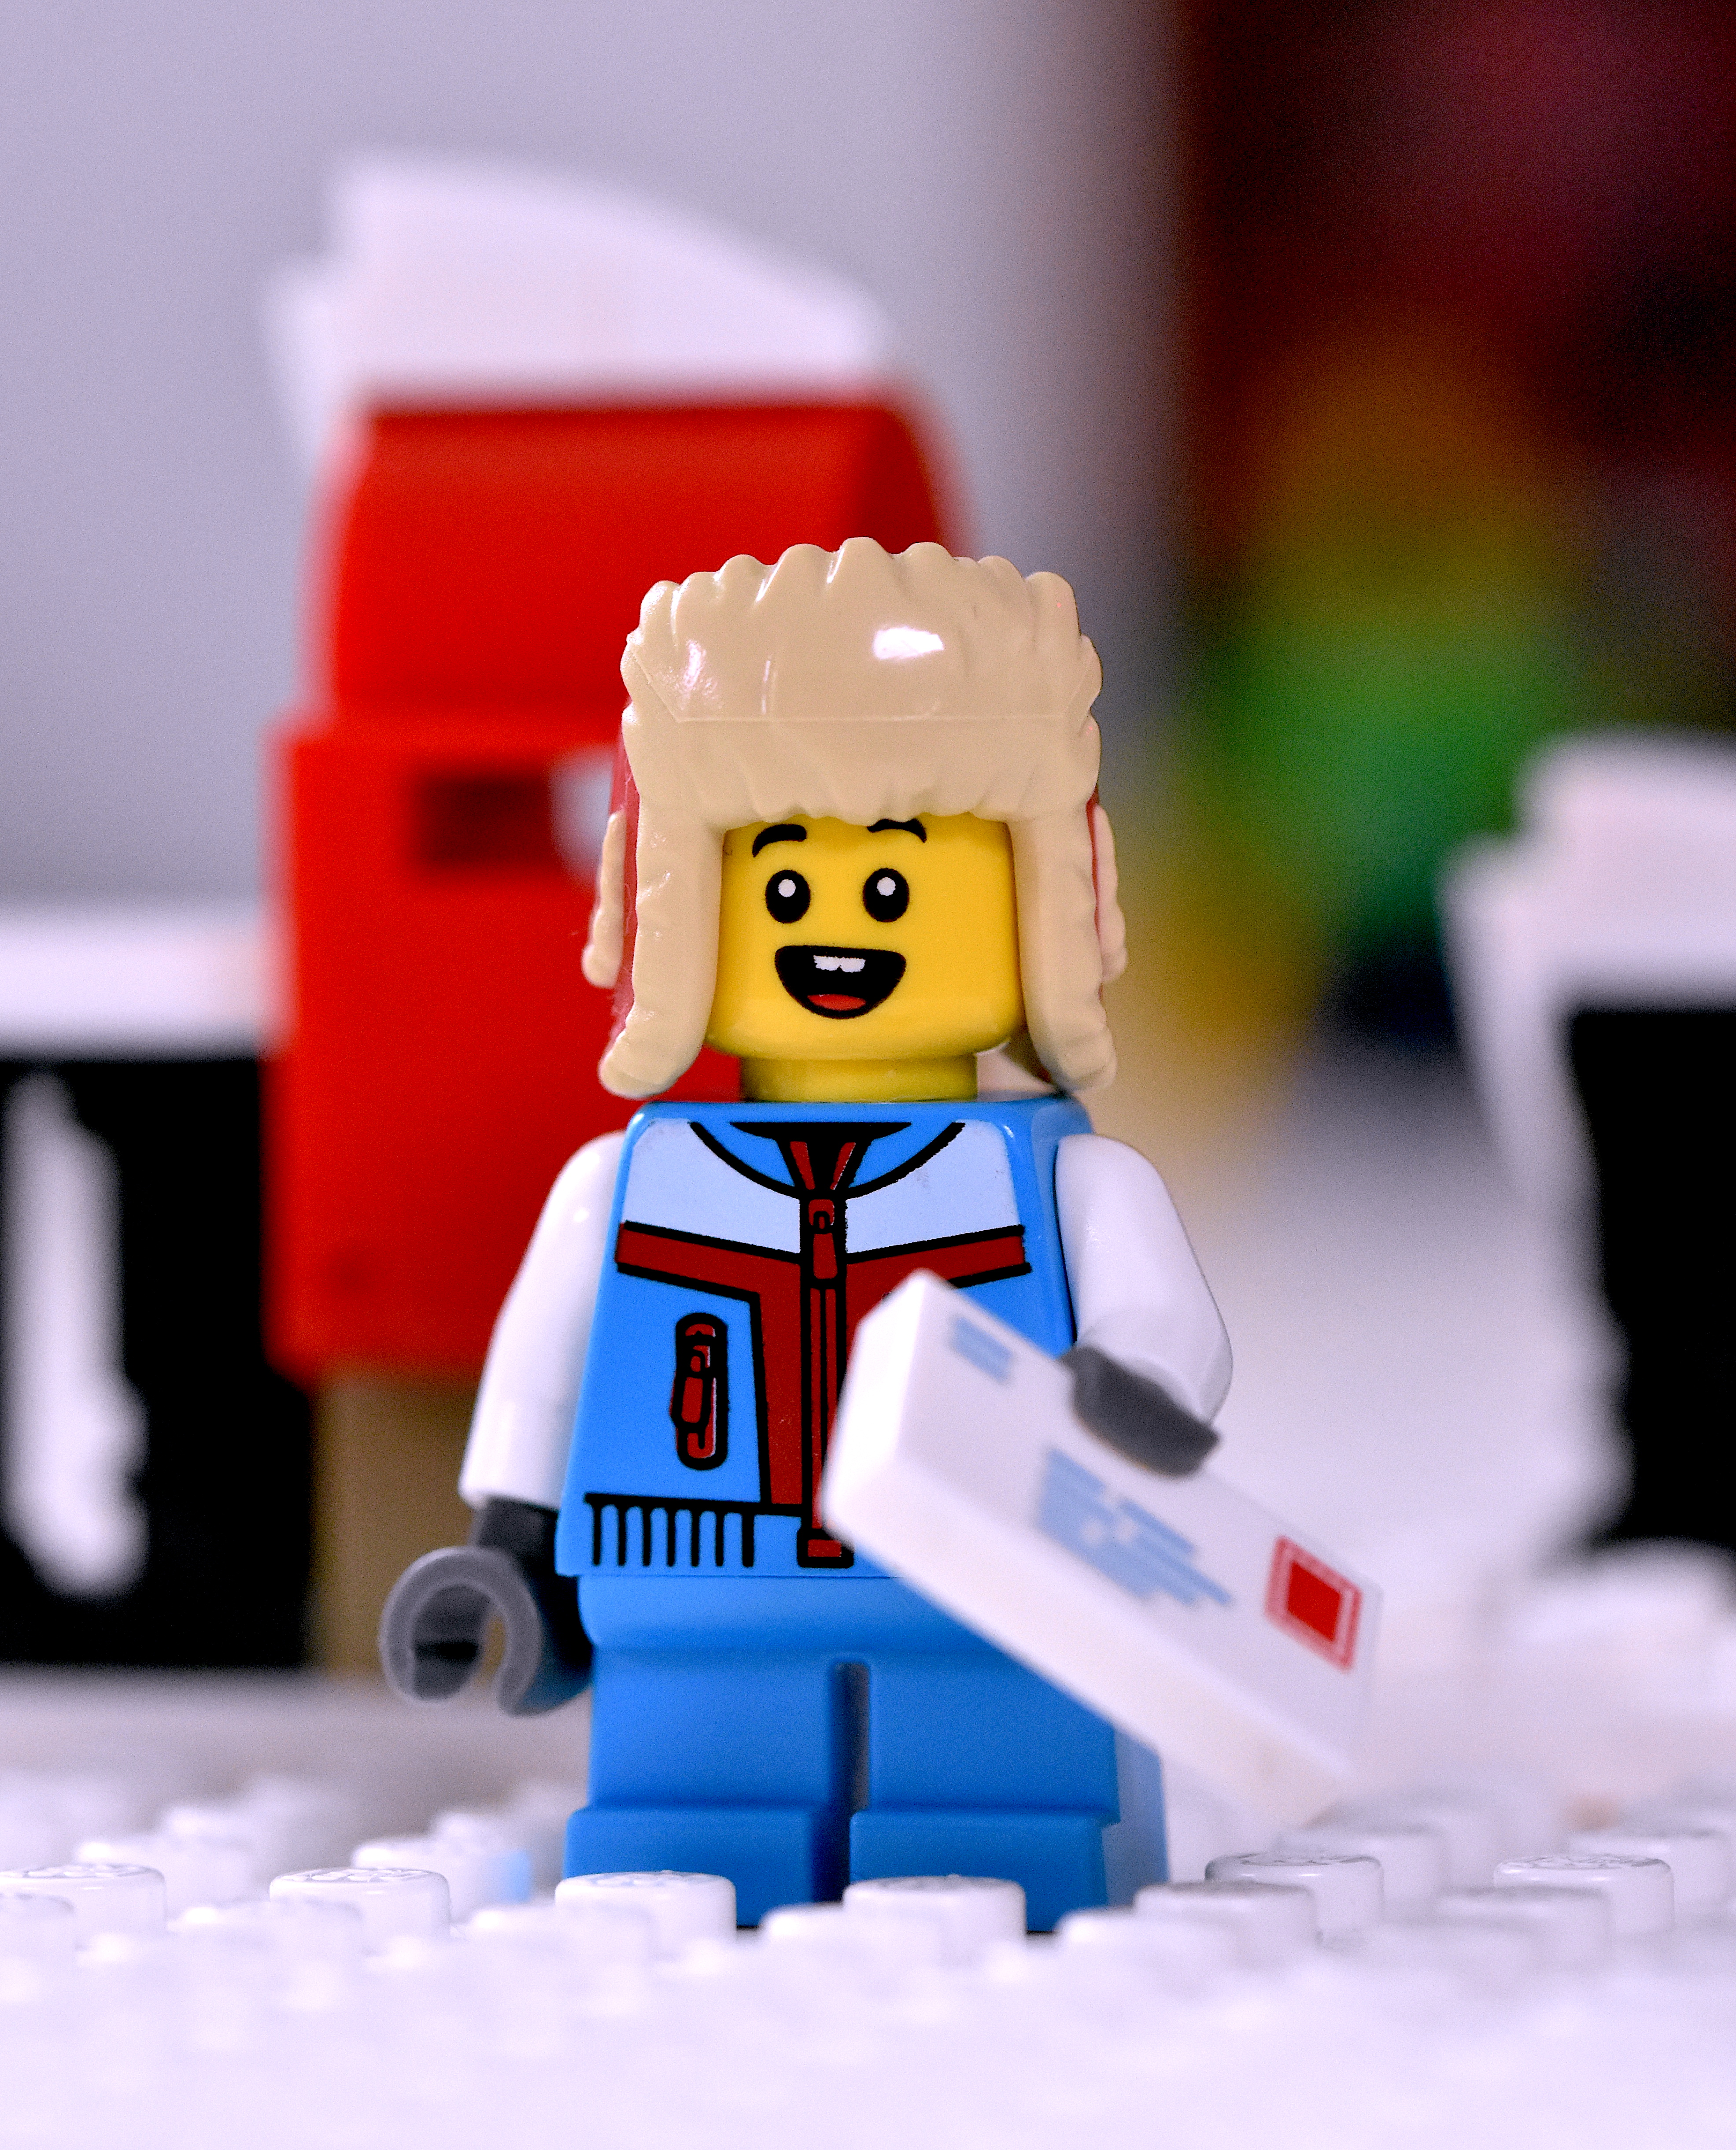 A Lego boy minifigure